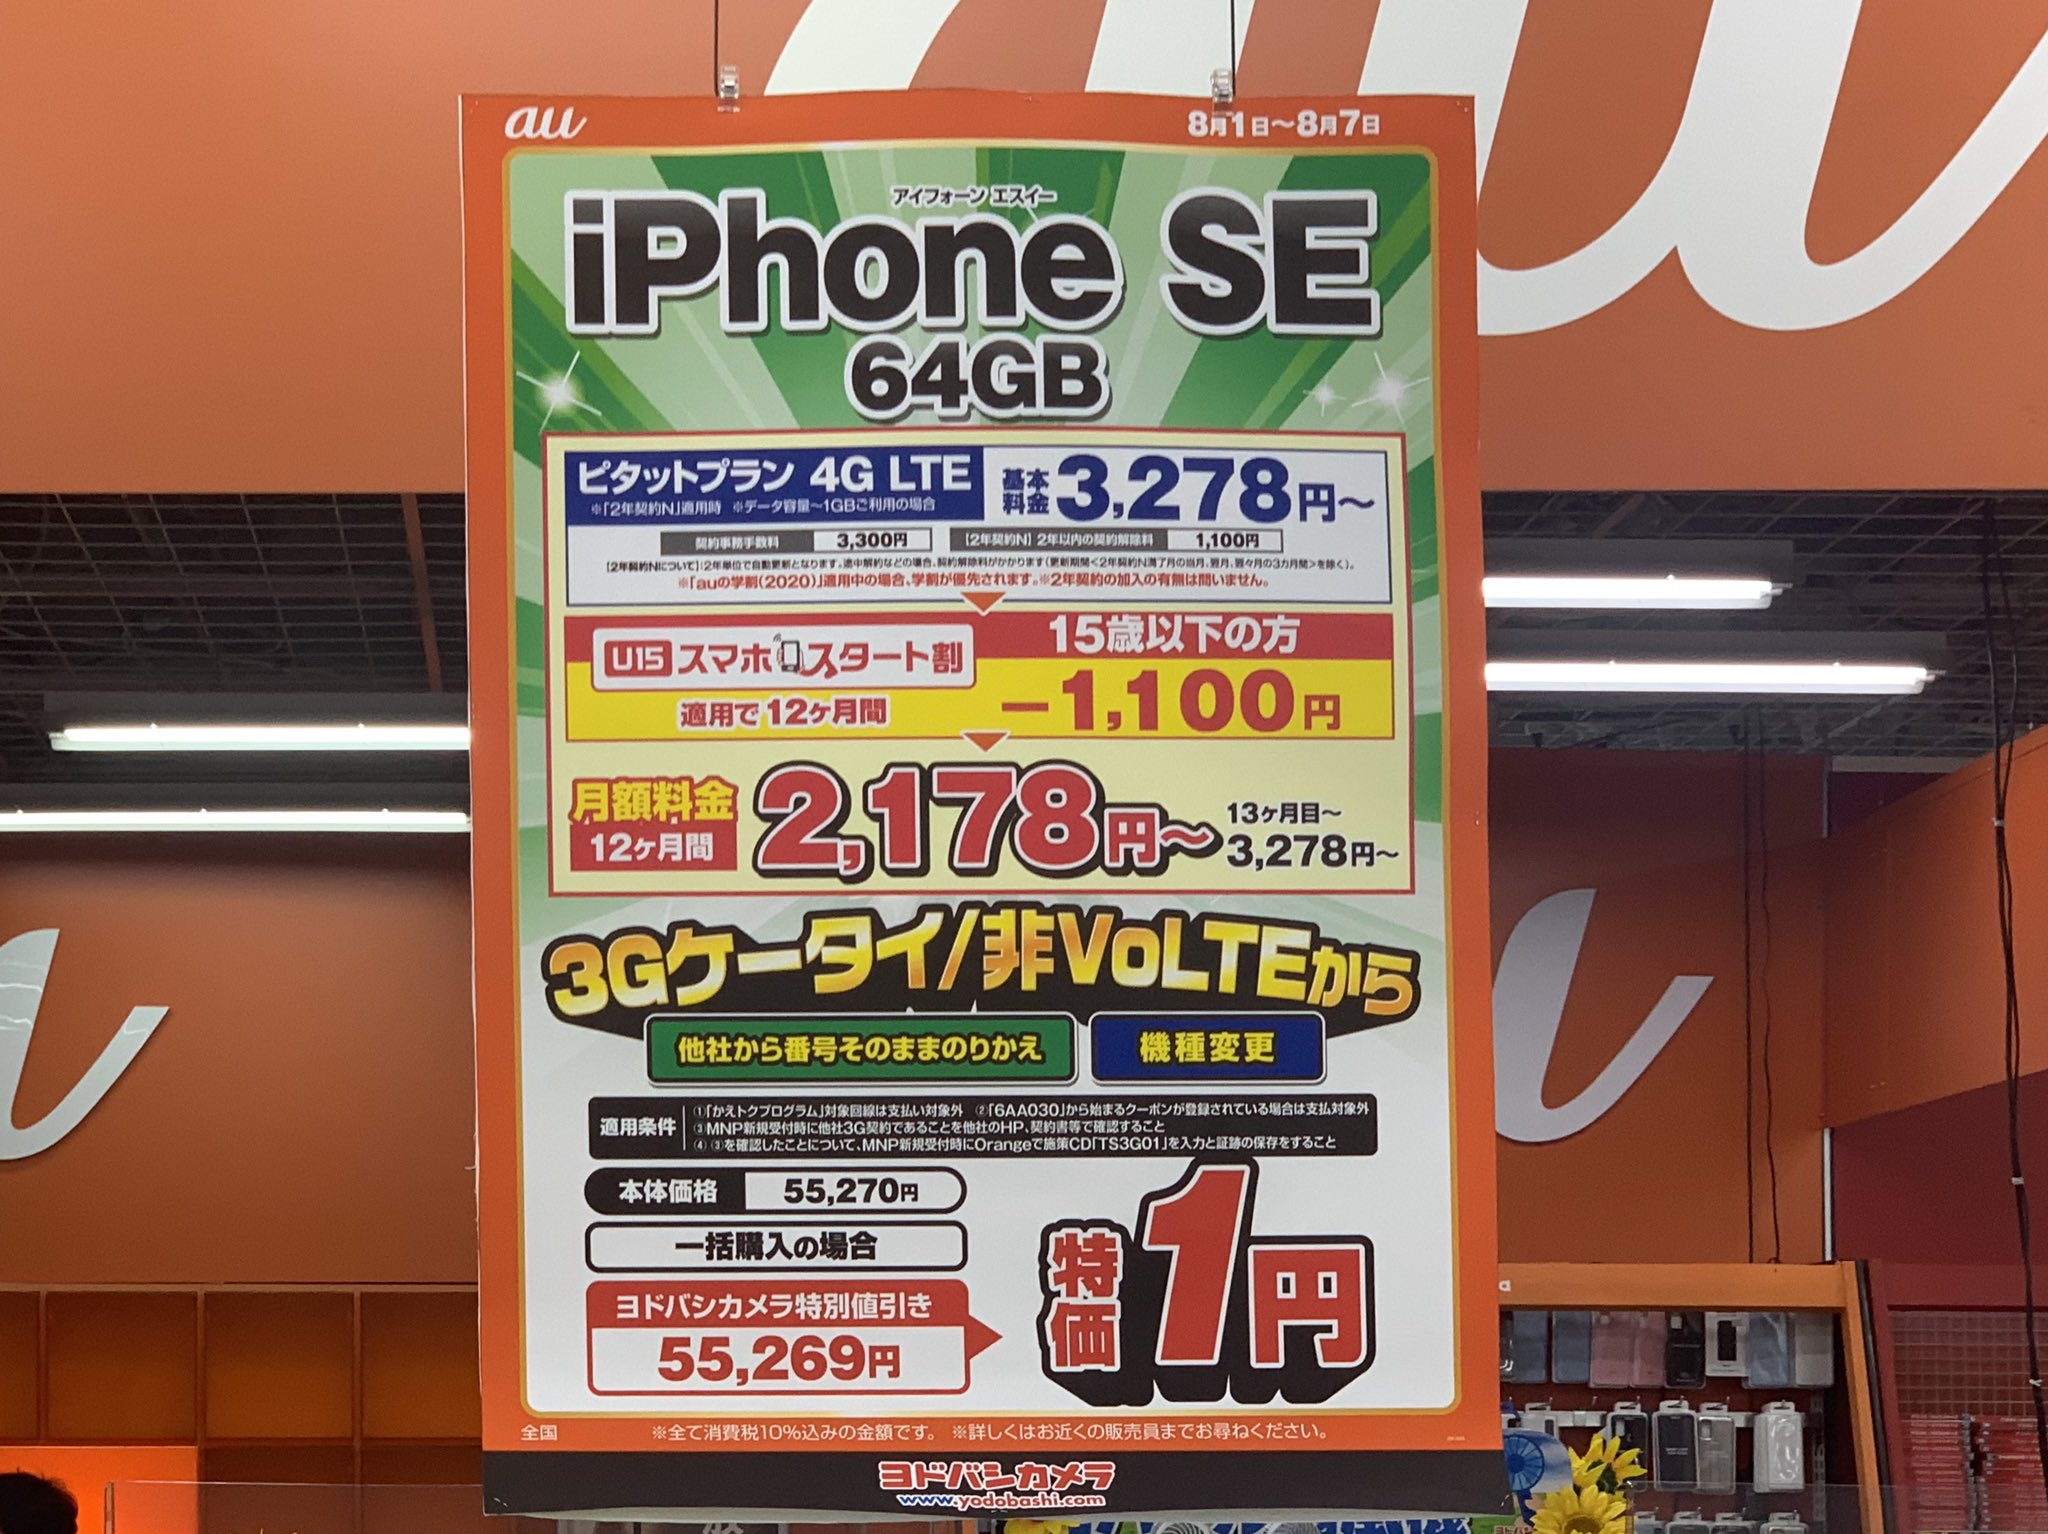 Au 3g ケータイ 機種変更で Iphone Se 第2世代 64 Gb 一括 1 円の特価 マイグレ案件 Skyblue